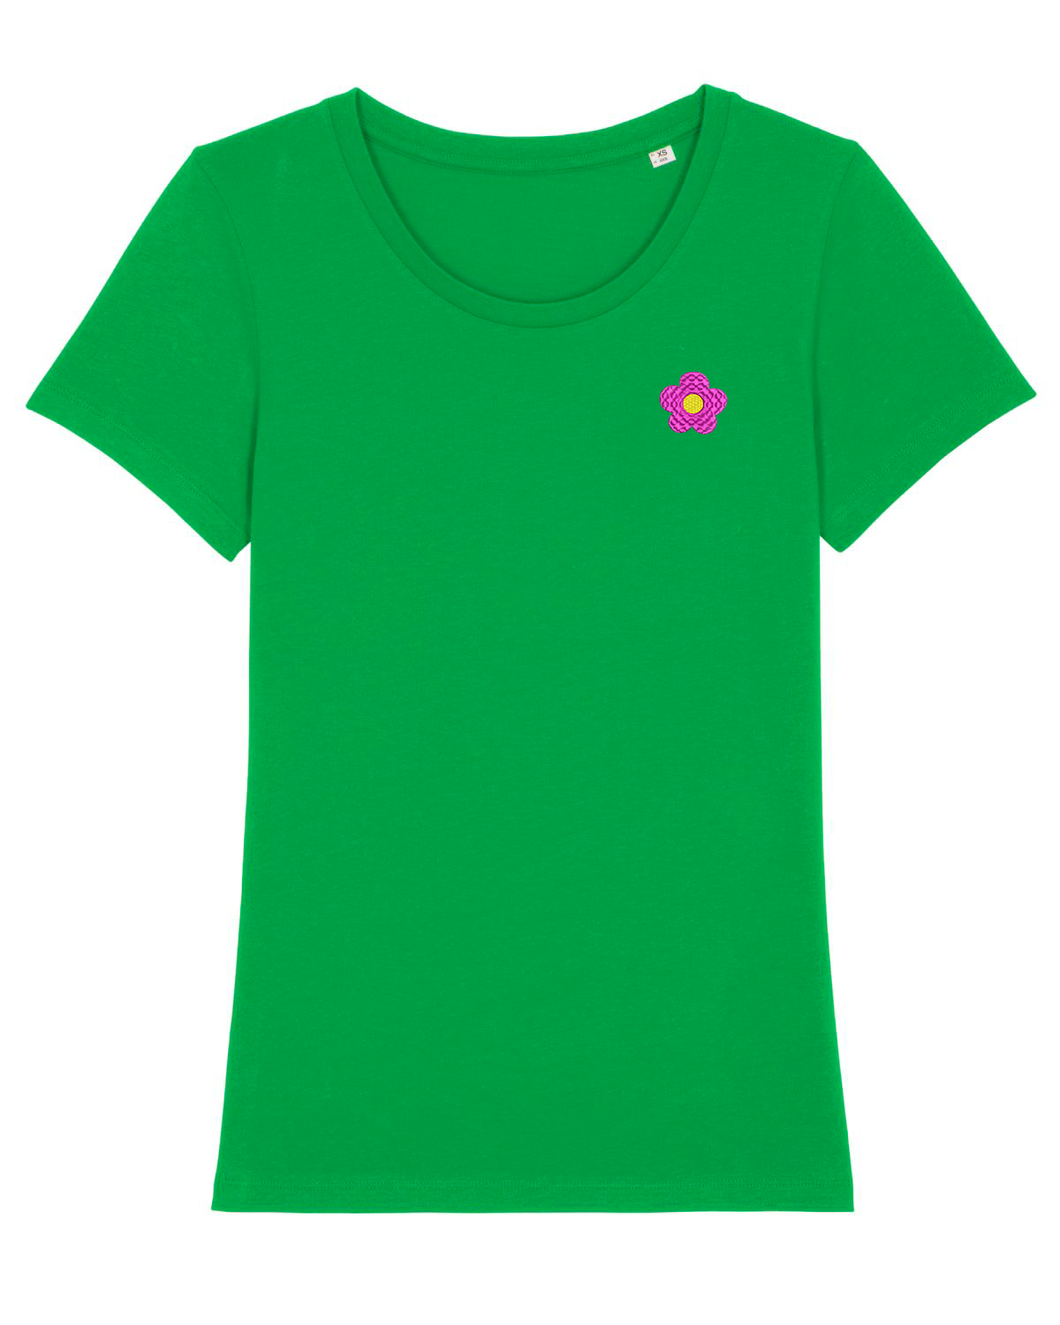 flower 🌸 - Embroidered women's t-shirt